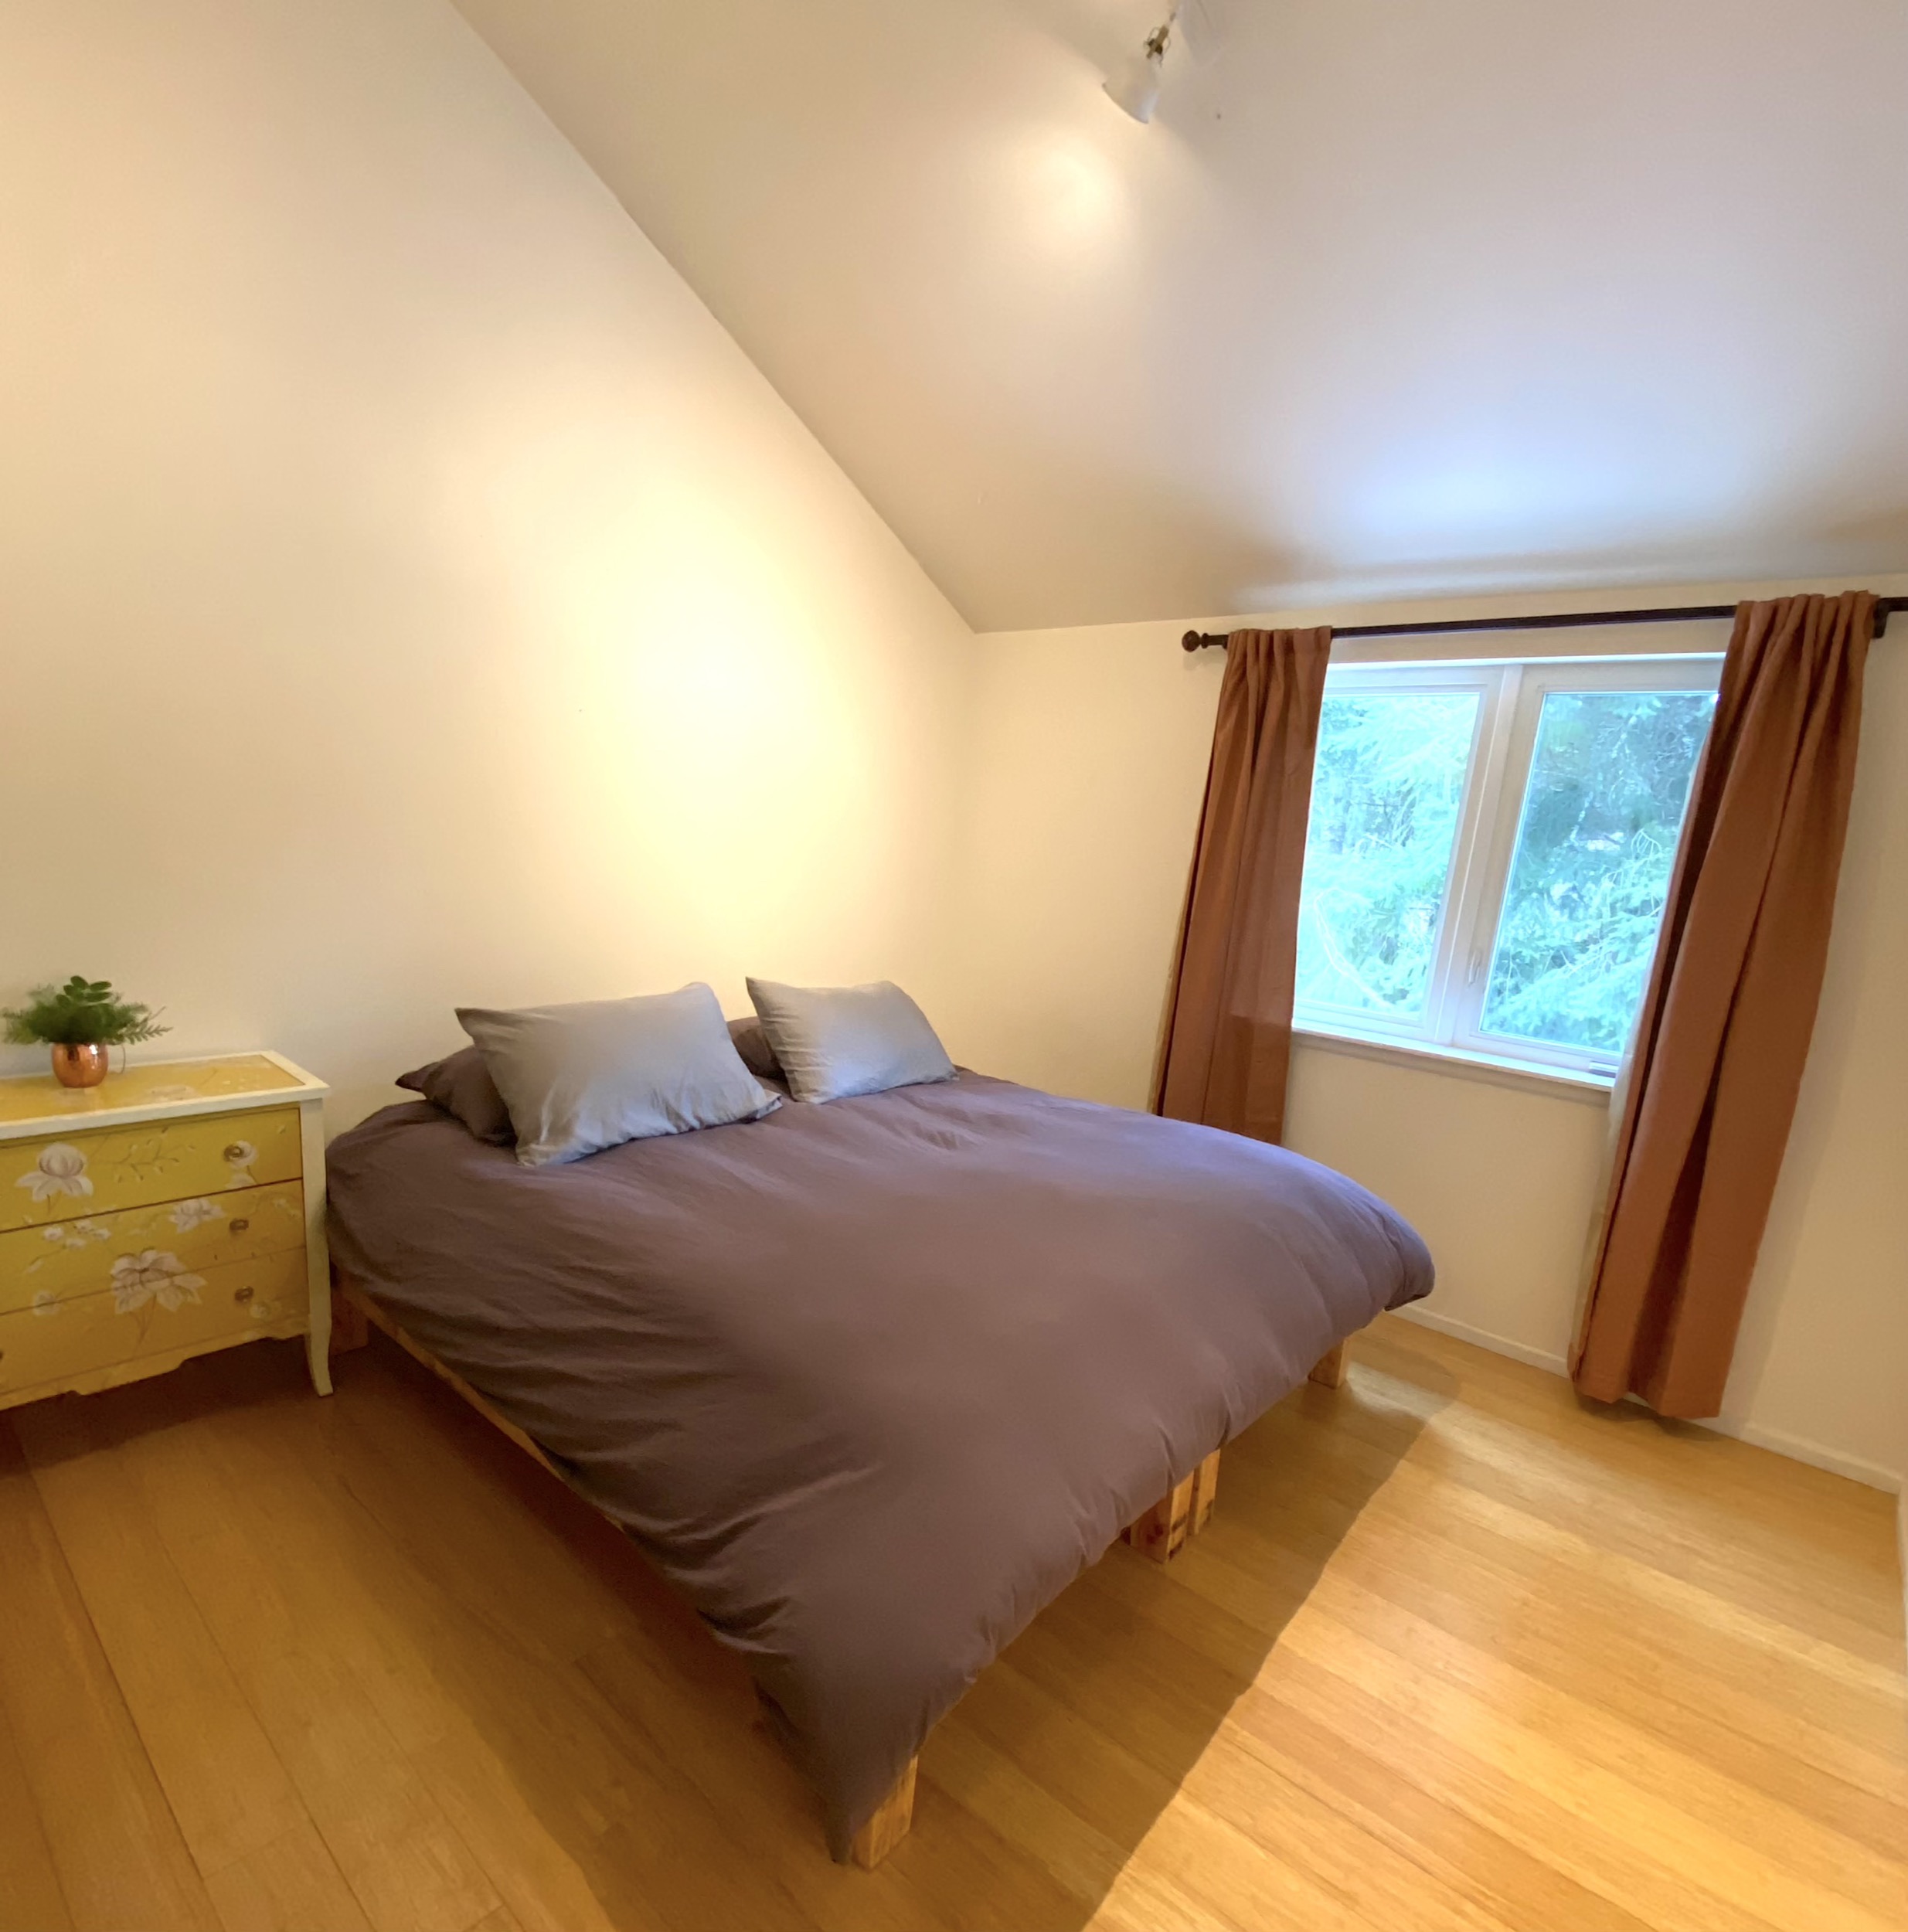 King bed twin xl bedroom dresser Mt. Rainier vacation rental home